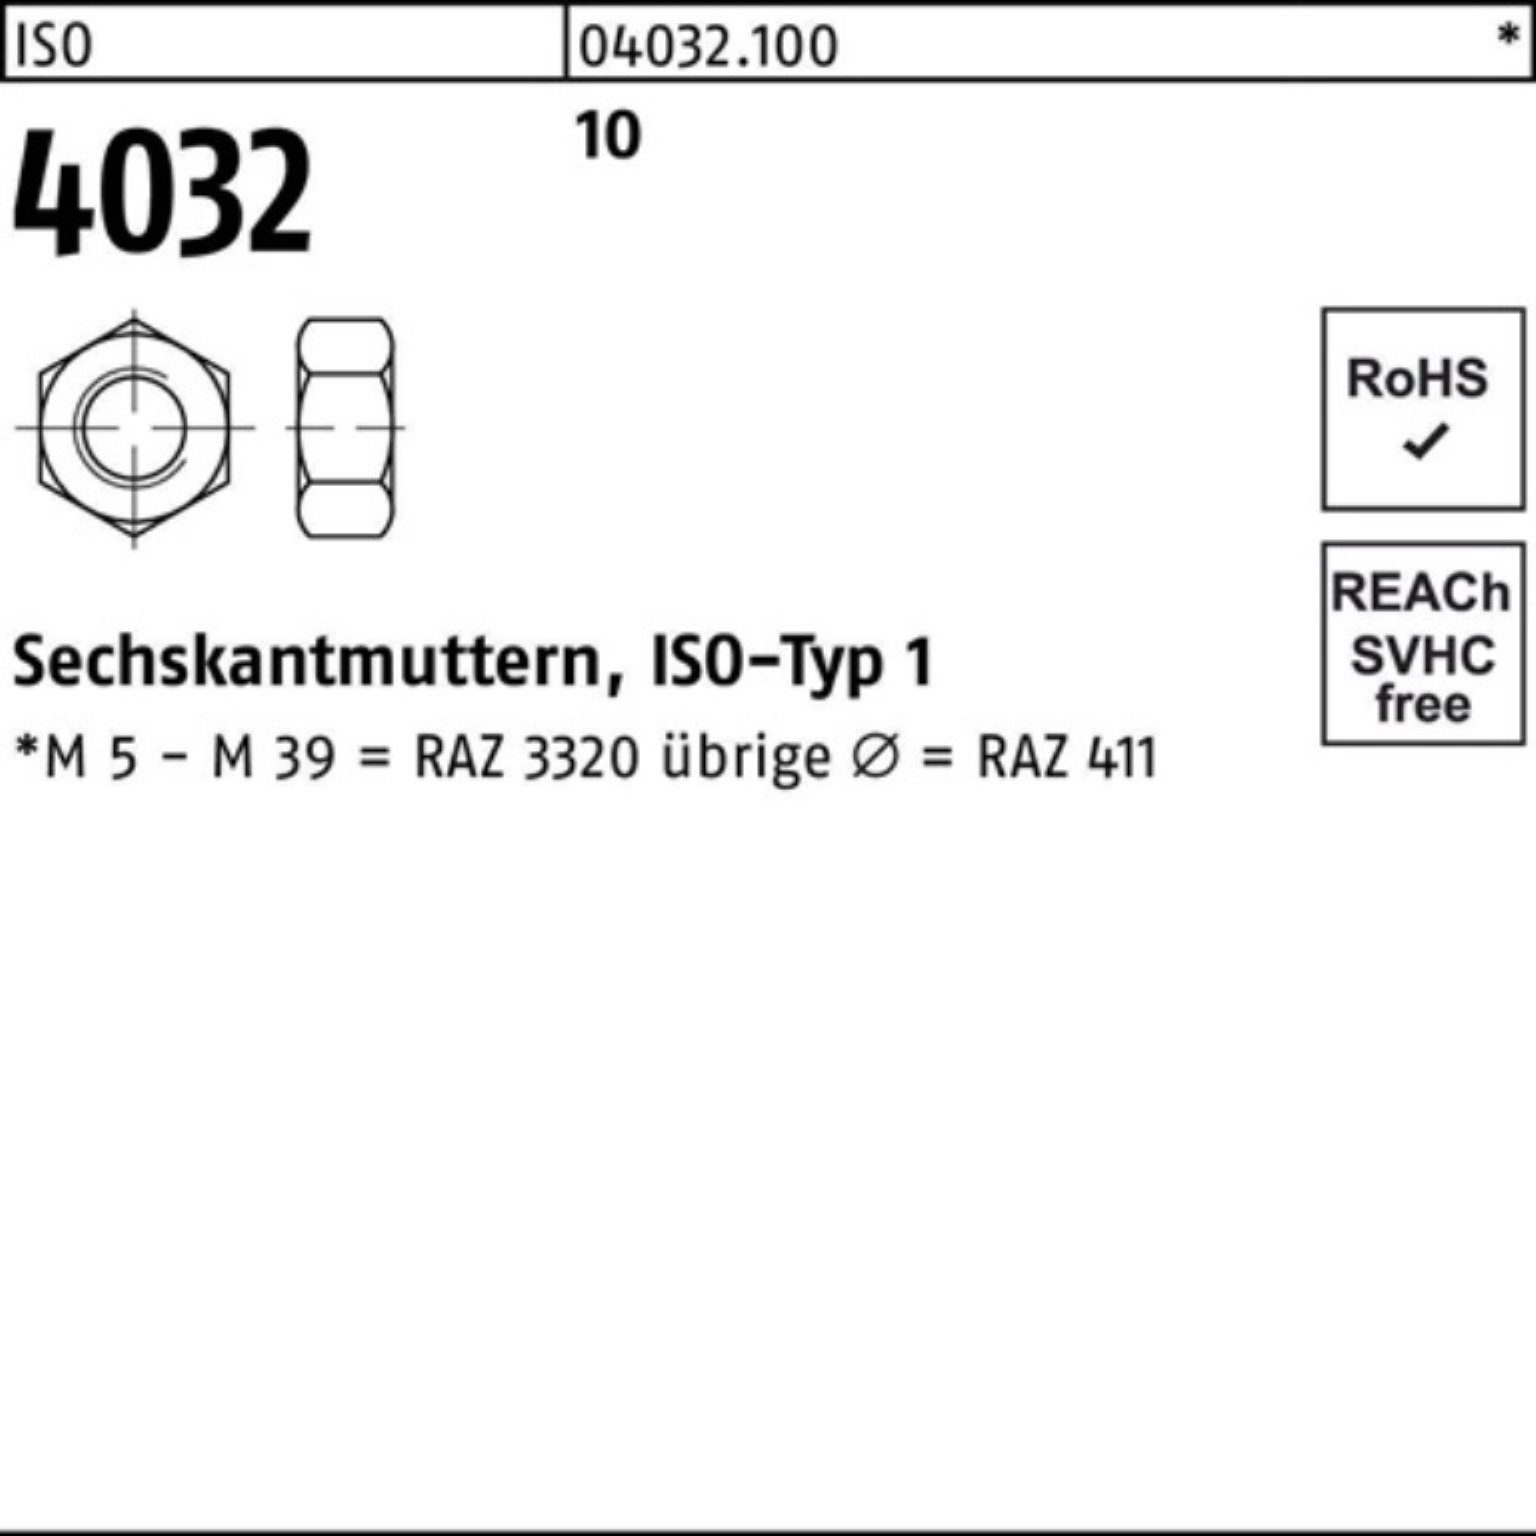 Bufab Muttern 100er Pack Sechskantmutter 4032 Sechsk 10 1 ISO 10 M45 4032 Stück ISO